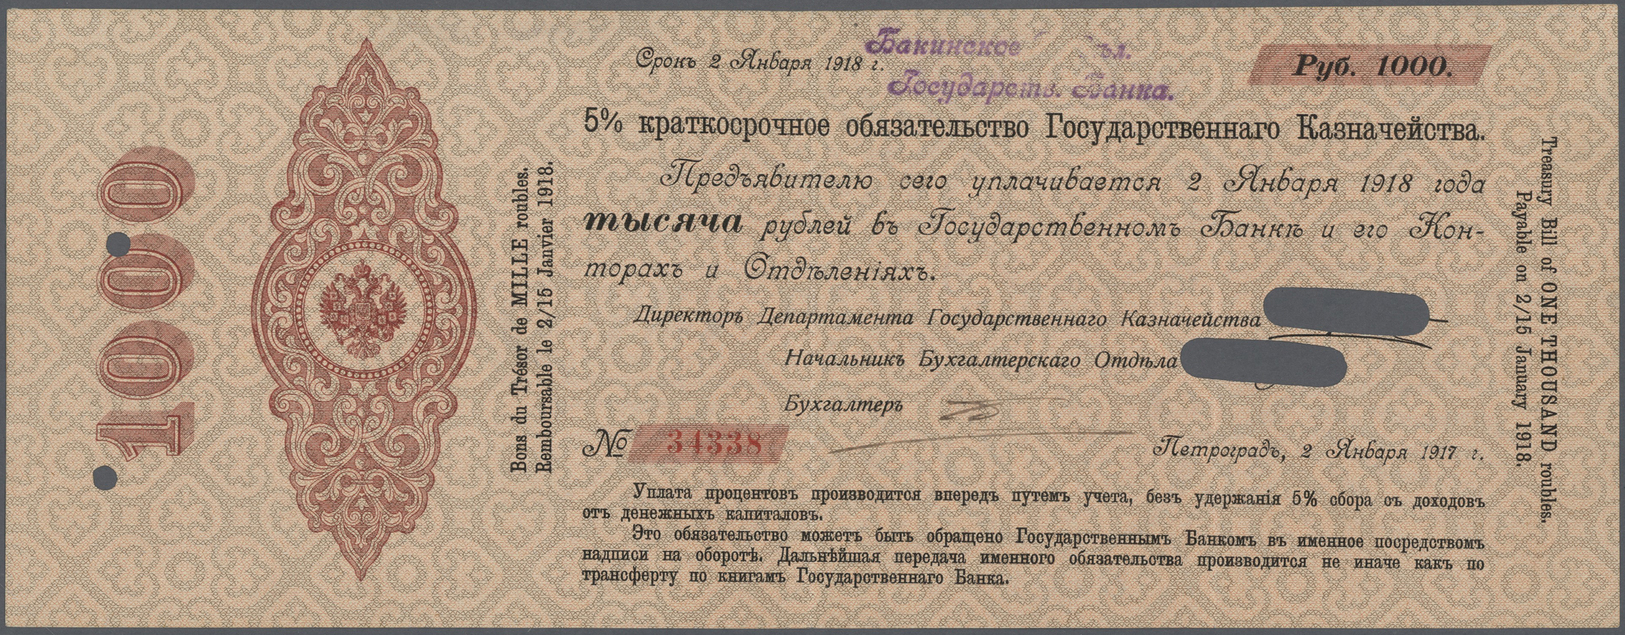 00208 Azerbaijan / Aserbaidschan: 1000 Rubles 1917 Baku R*21331 With Bank Hole Cancellations, Center Fold, Crisp Paper, - Azerbaïjan